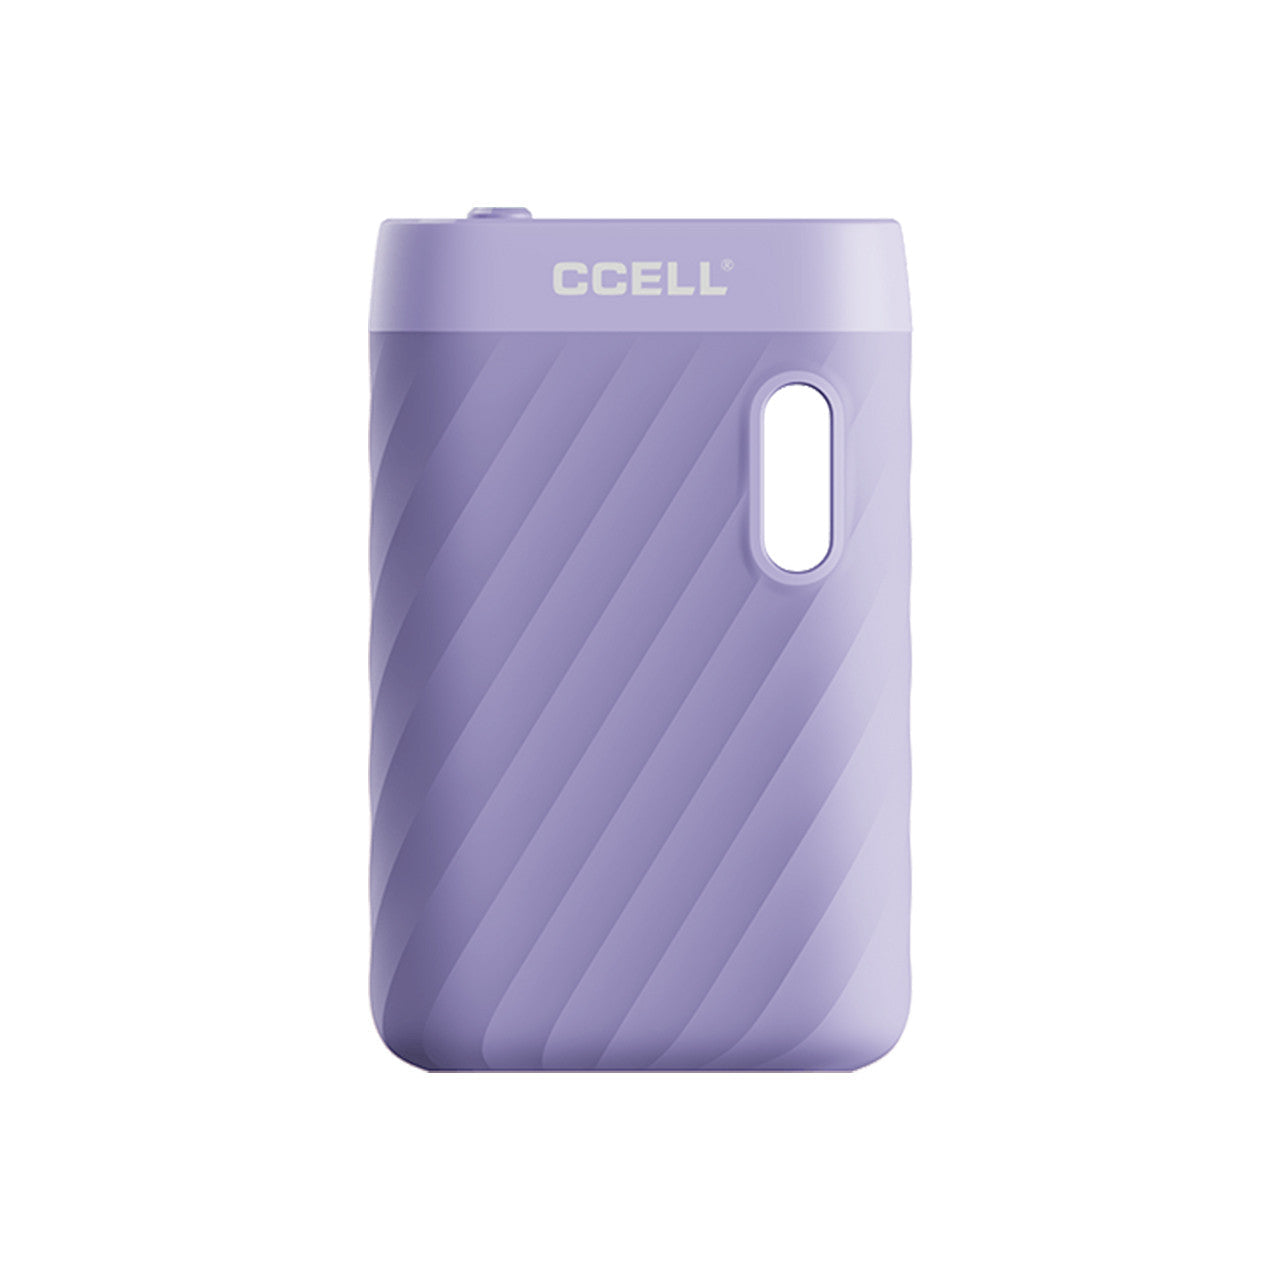 CCELL Sandwave 510 Vape Cartridge Battery Lavender